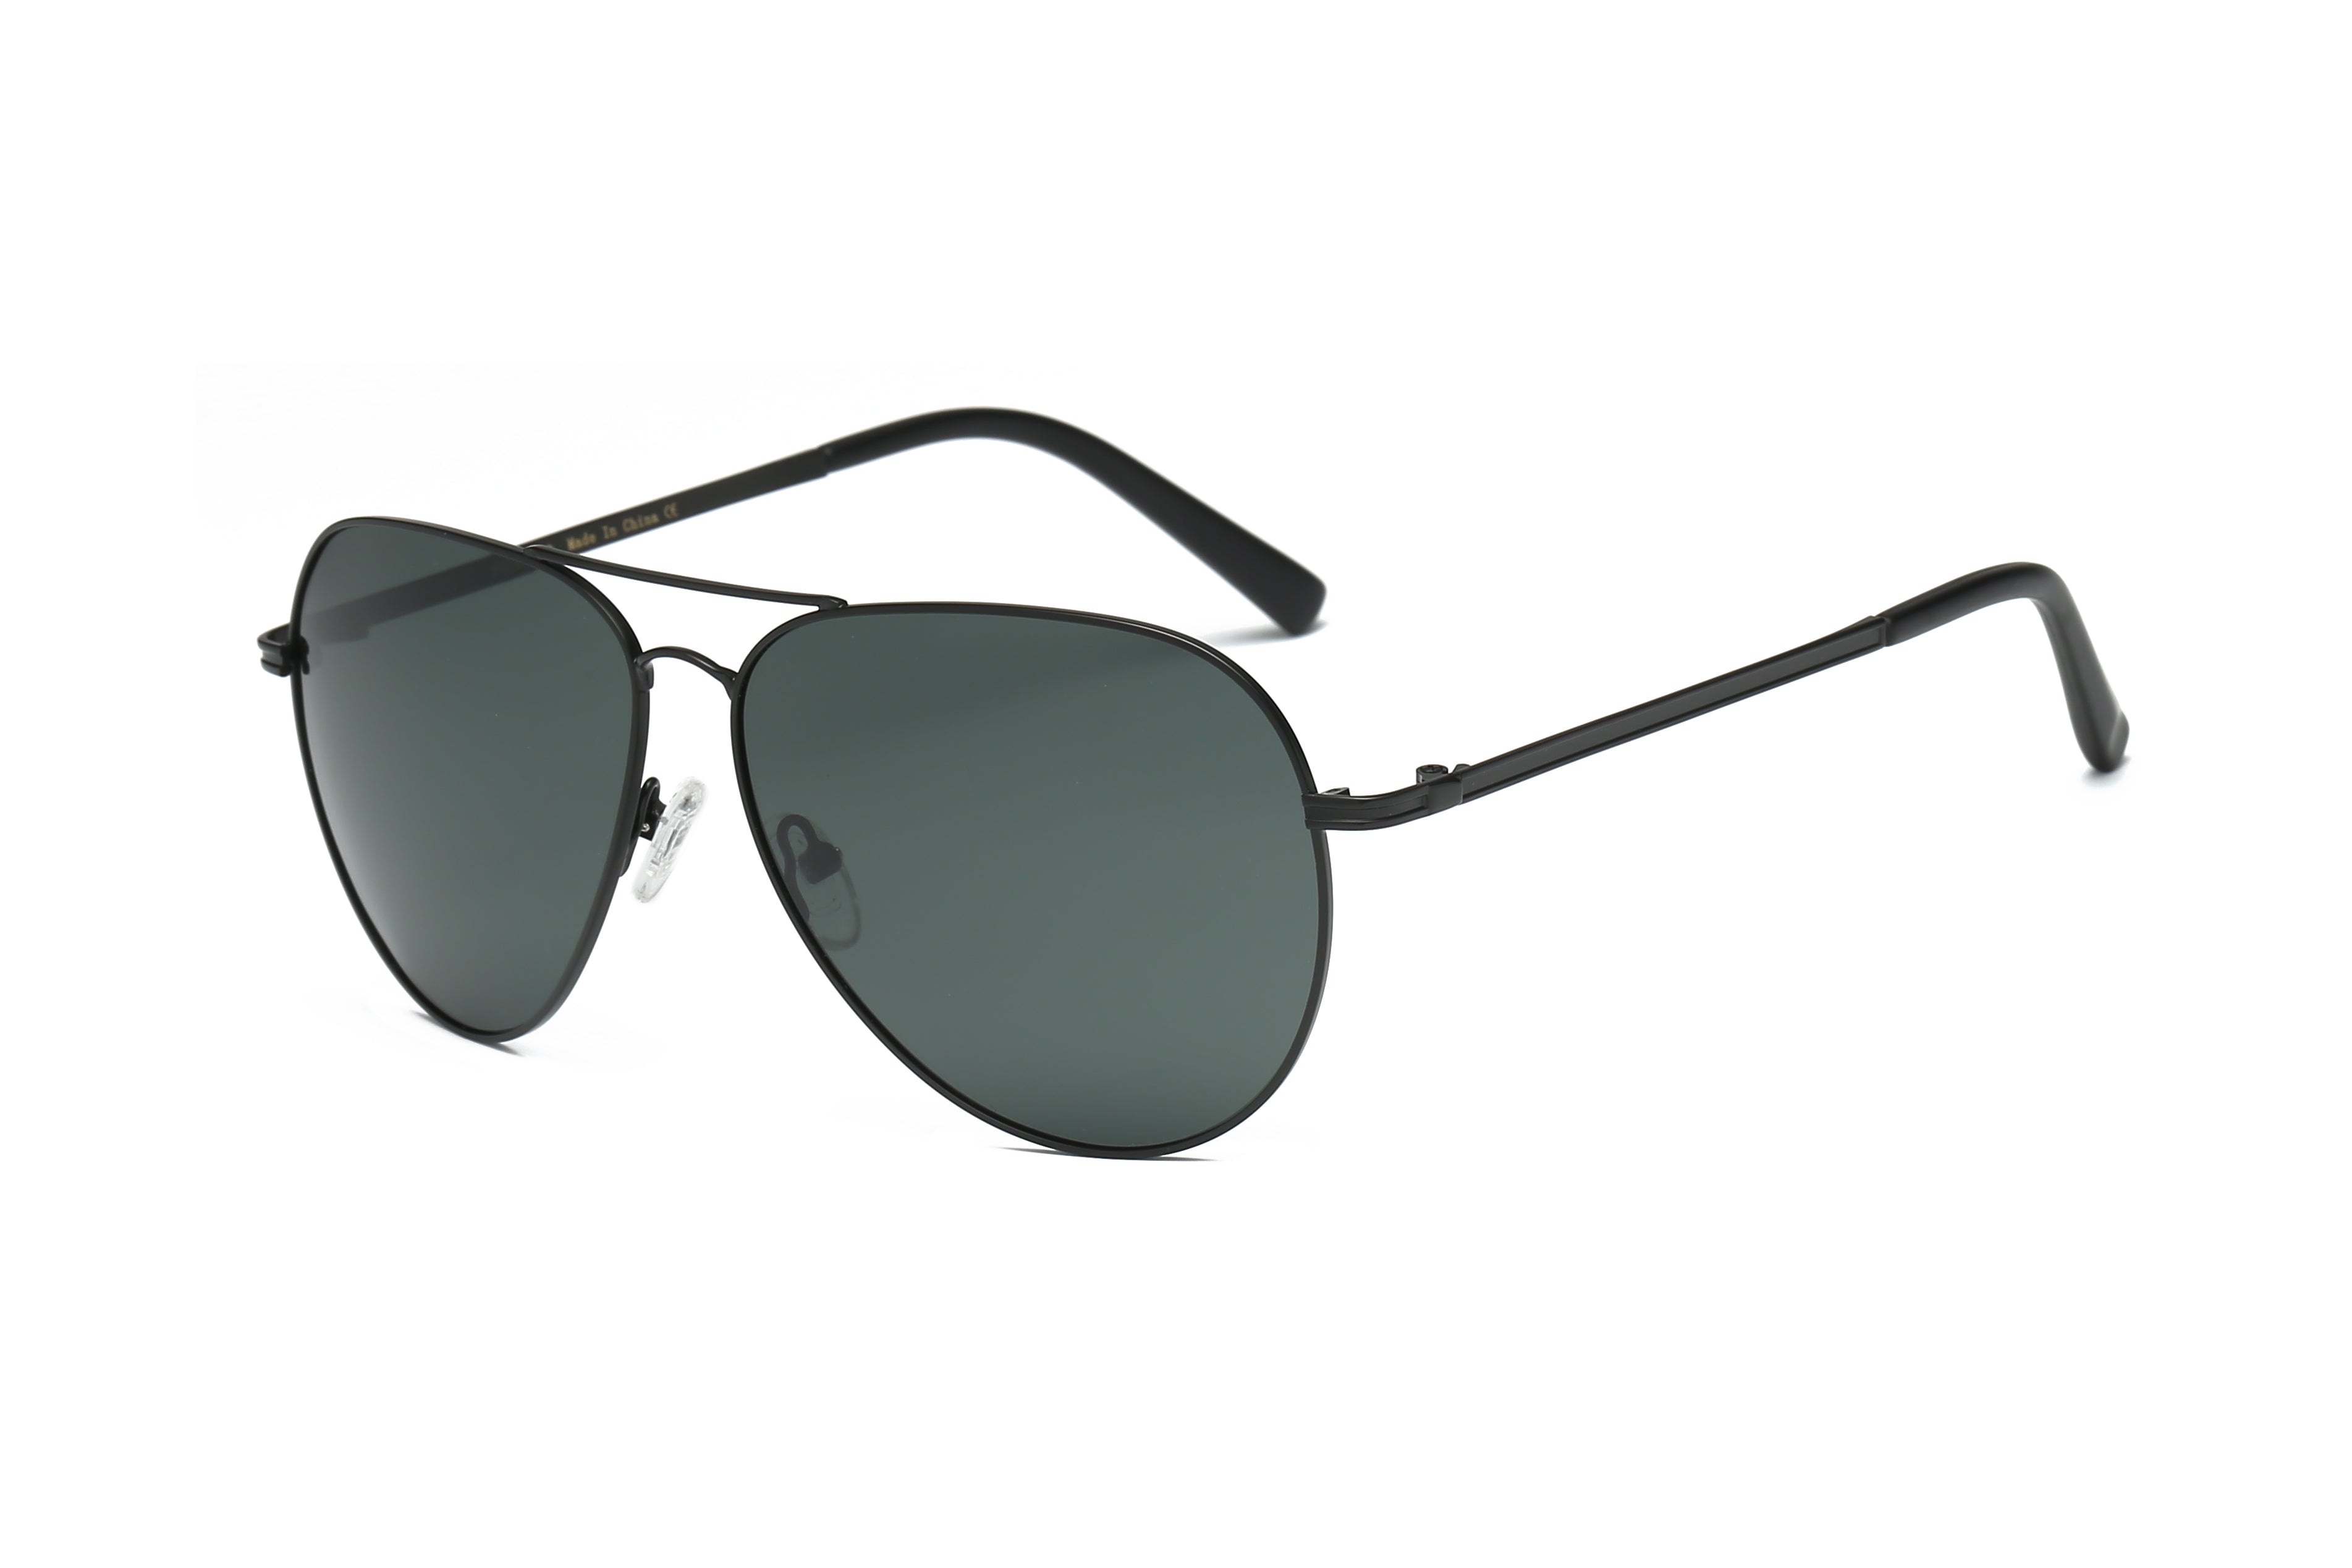 P4004 - Metal Classic Polarized Aviator Sunglasses Olive/Black